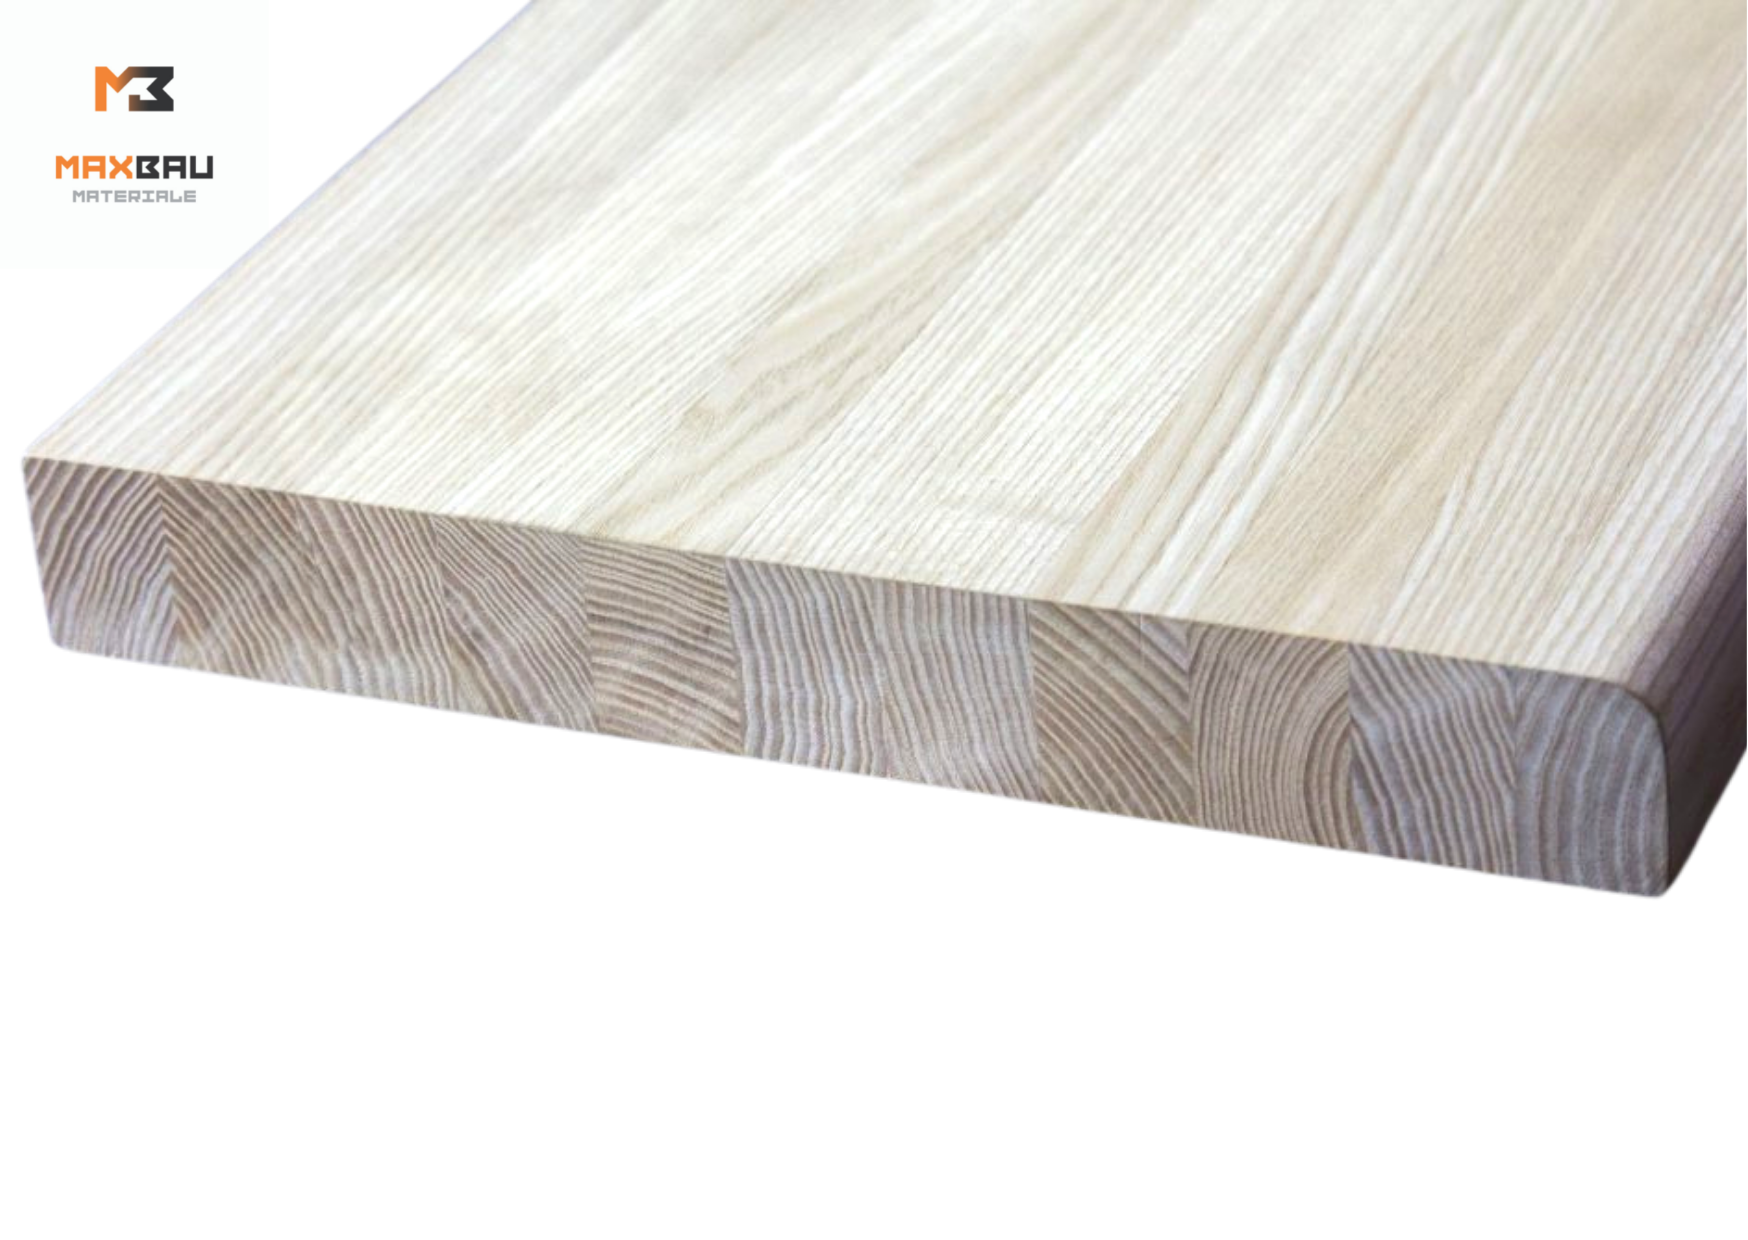 Placi din lemn incleiat - Placa de lemn incleiat MaxBau 1200 x 200 x 28 mm Clasa AB, maxbau.ro